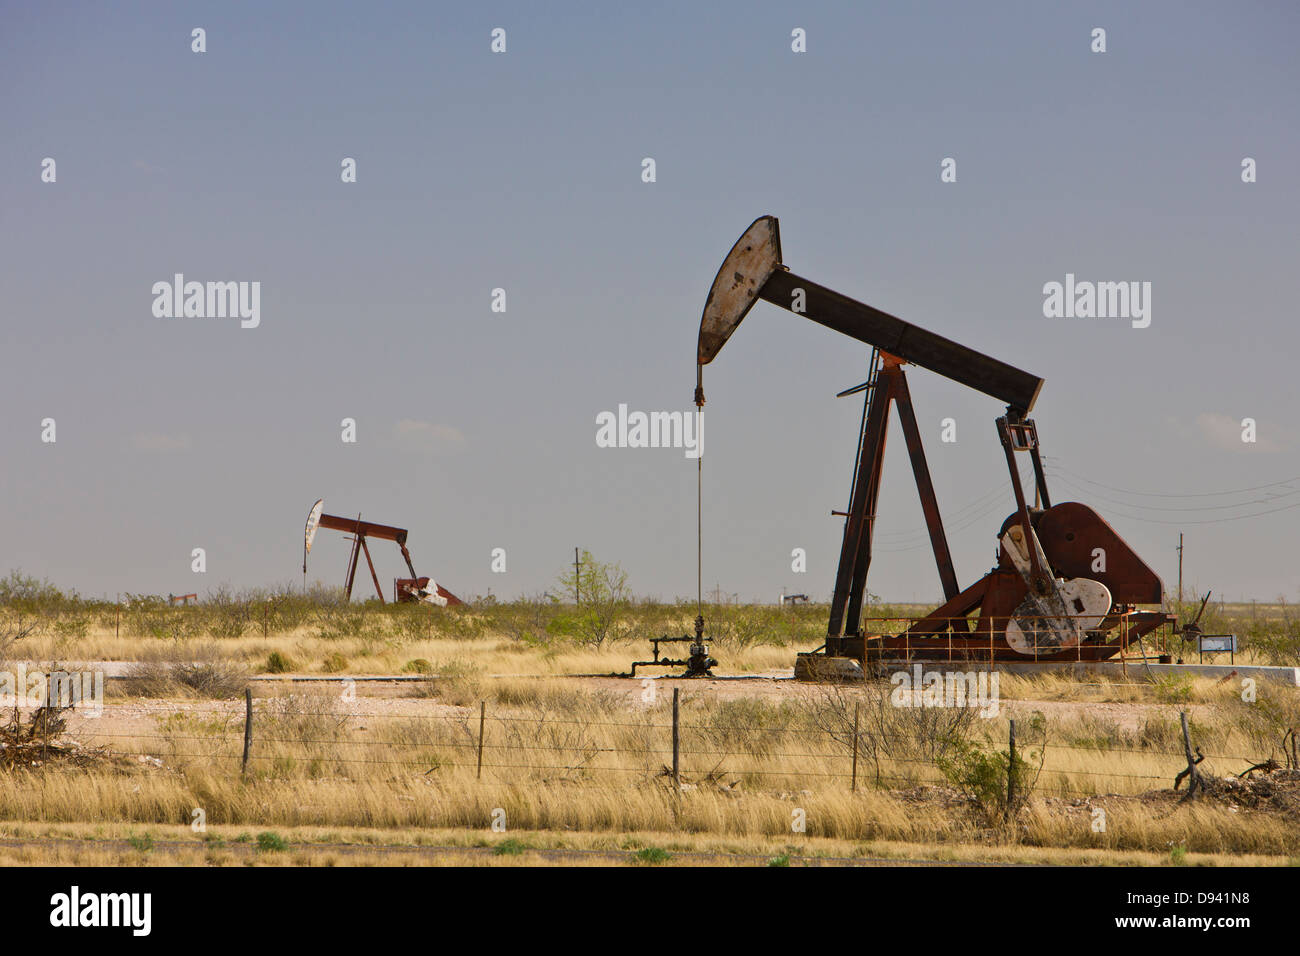 Oil pumps in desert, Texas, USA. Stock Photo